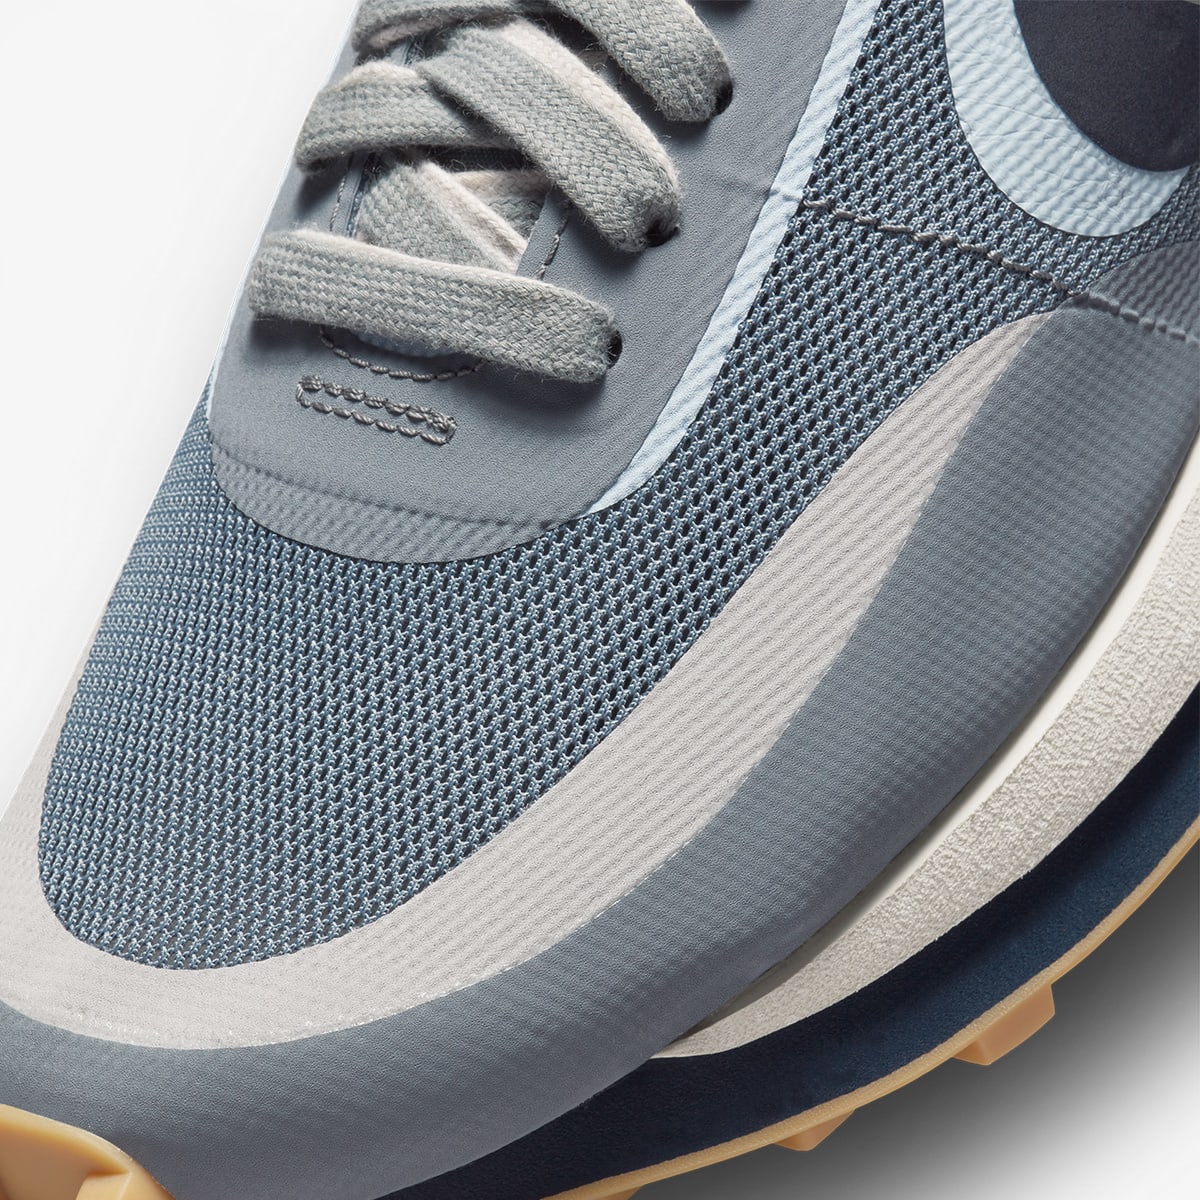 Nike x Sacai x CLOT LDWaffle (Cool Grey, Obsidian & Grey) | END. Launches